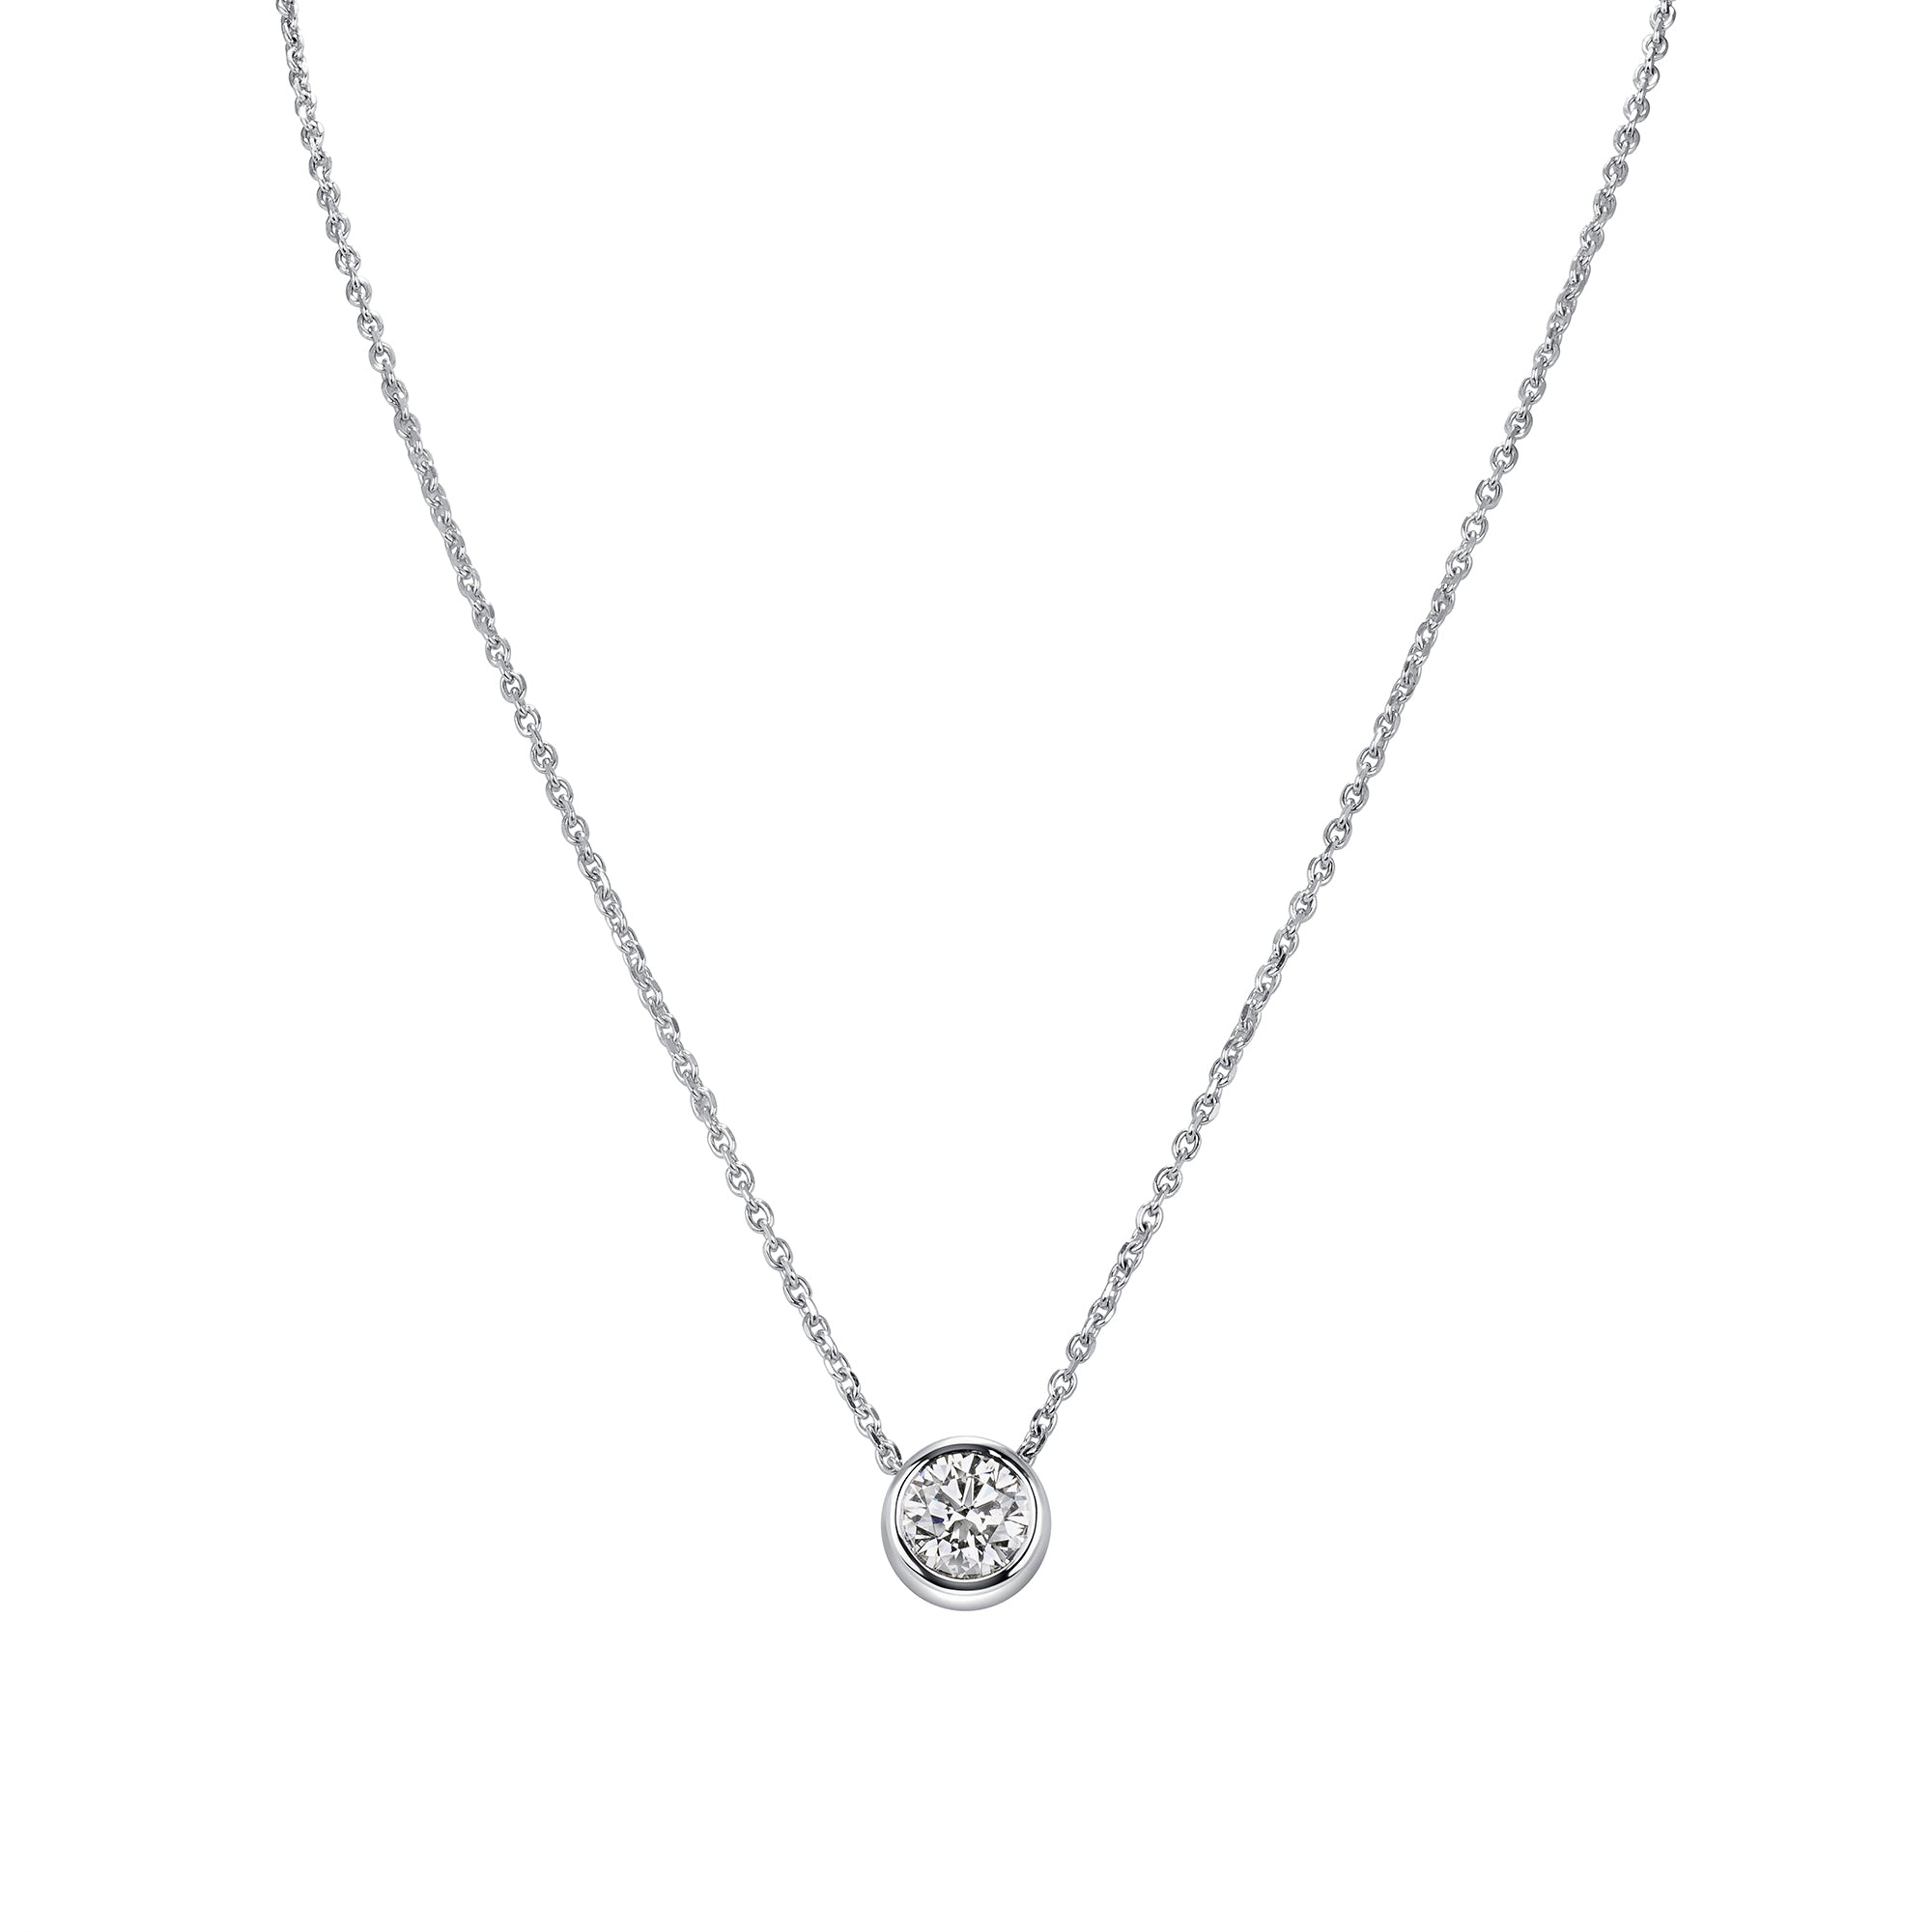 Round Cut Bezel Set Diamond Pendant Necklace in White Gold